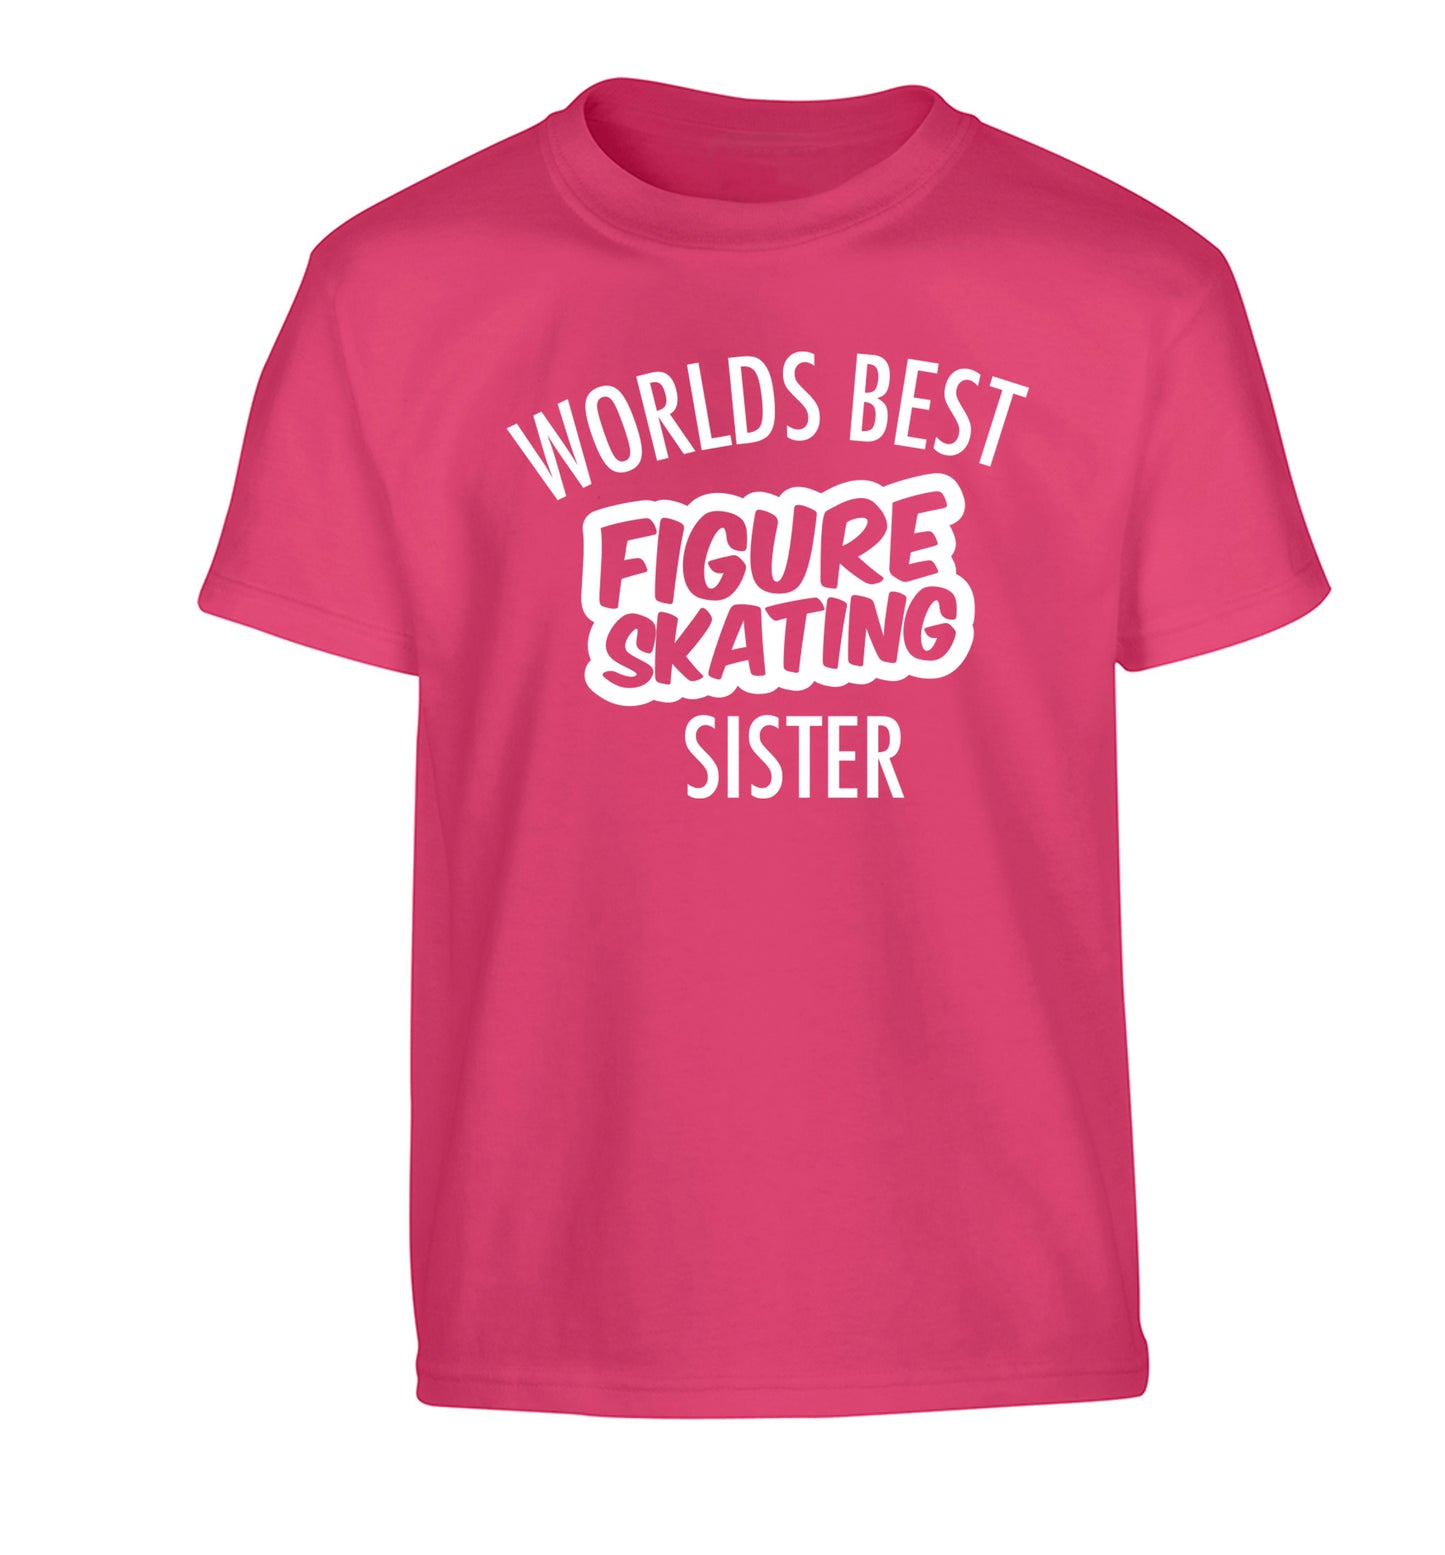 Worlds best figure skating sisterChildren's pink Tshirt 12-14 Years